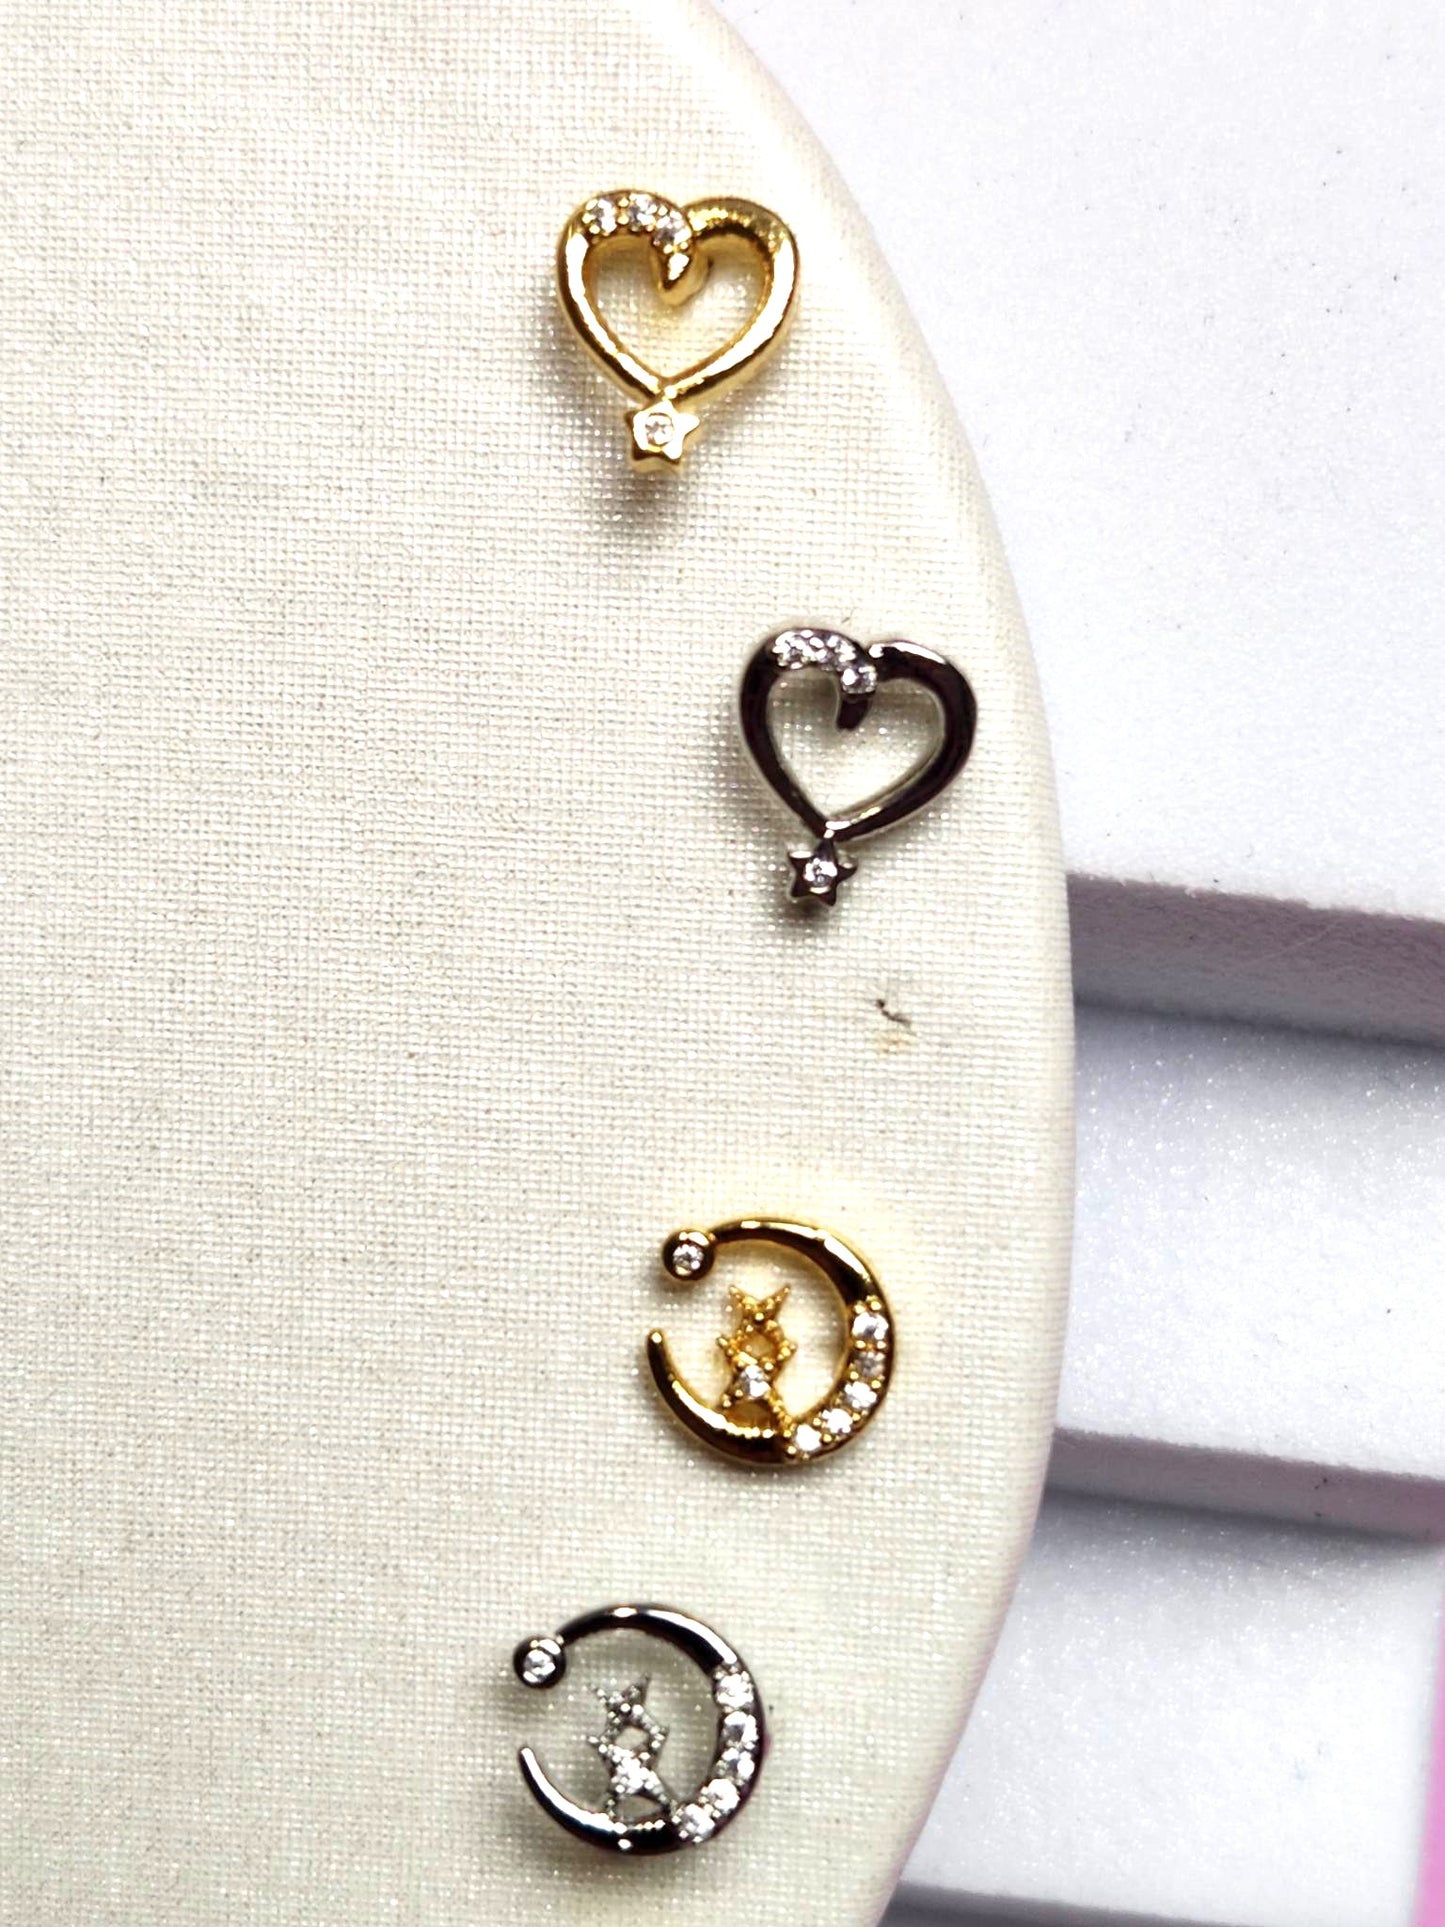 1 x Charmed Love Heart 16g Earrings Design Tragus Daith Cartilage Ear Piercing - Pierced n Proud